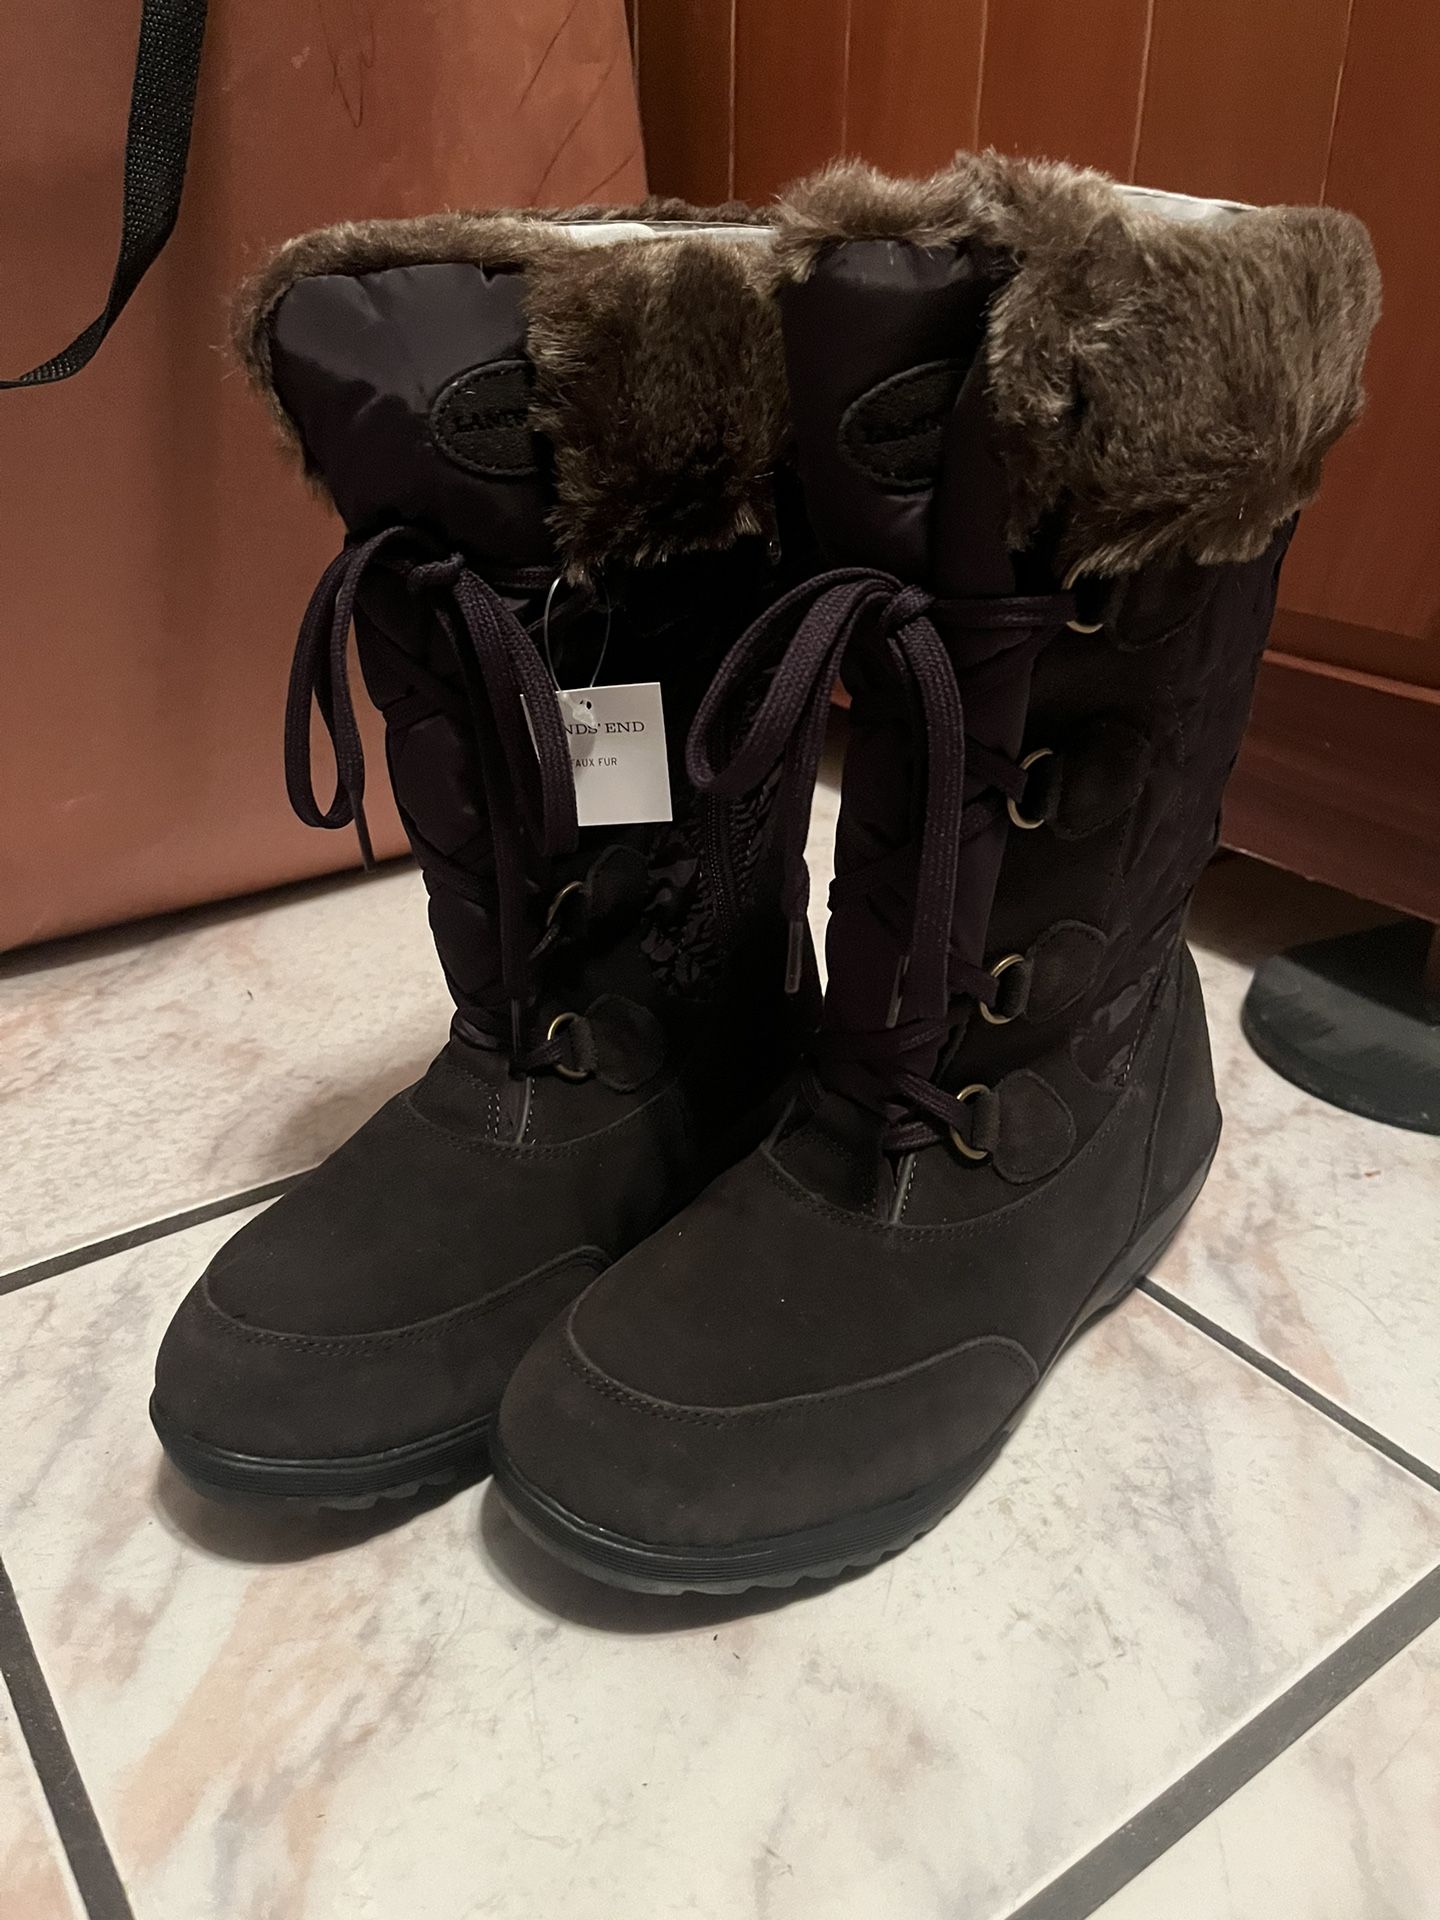 Winter Boots Never Worn